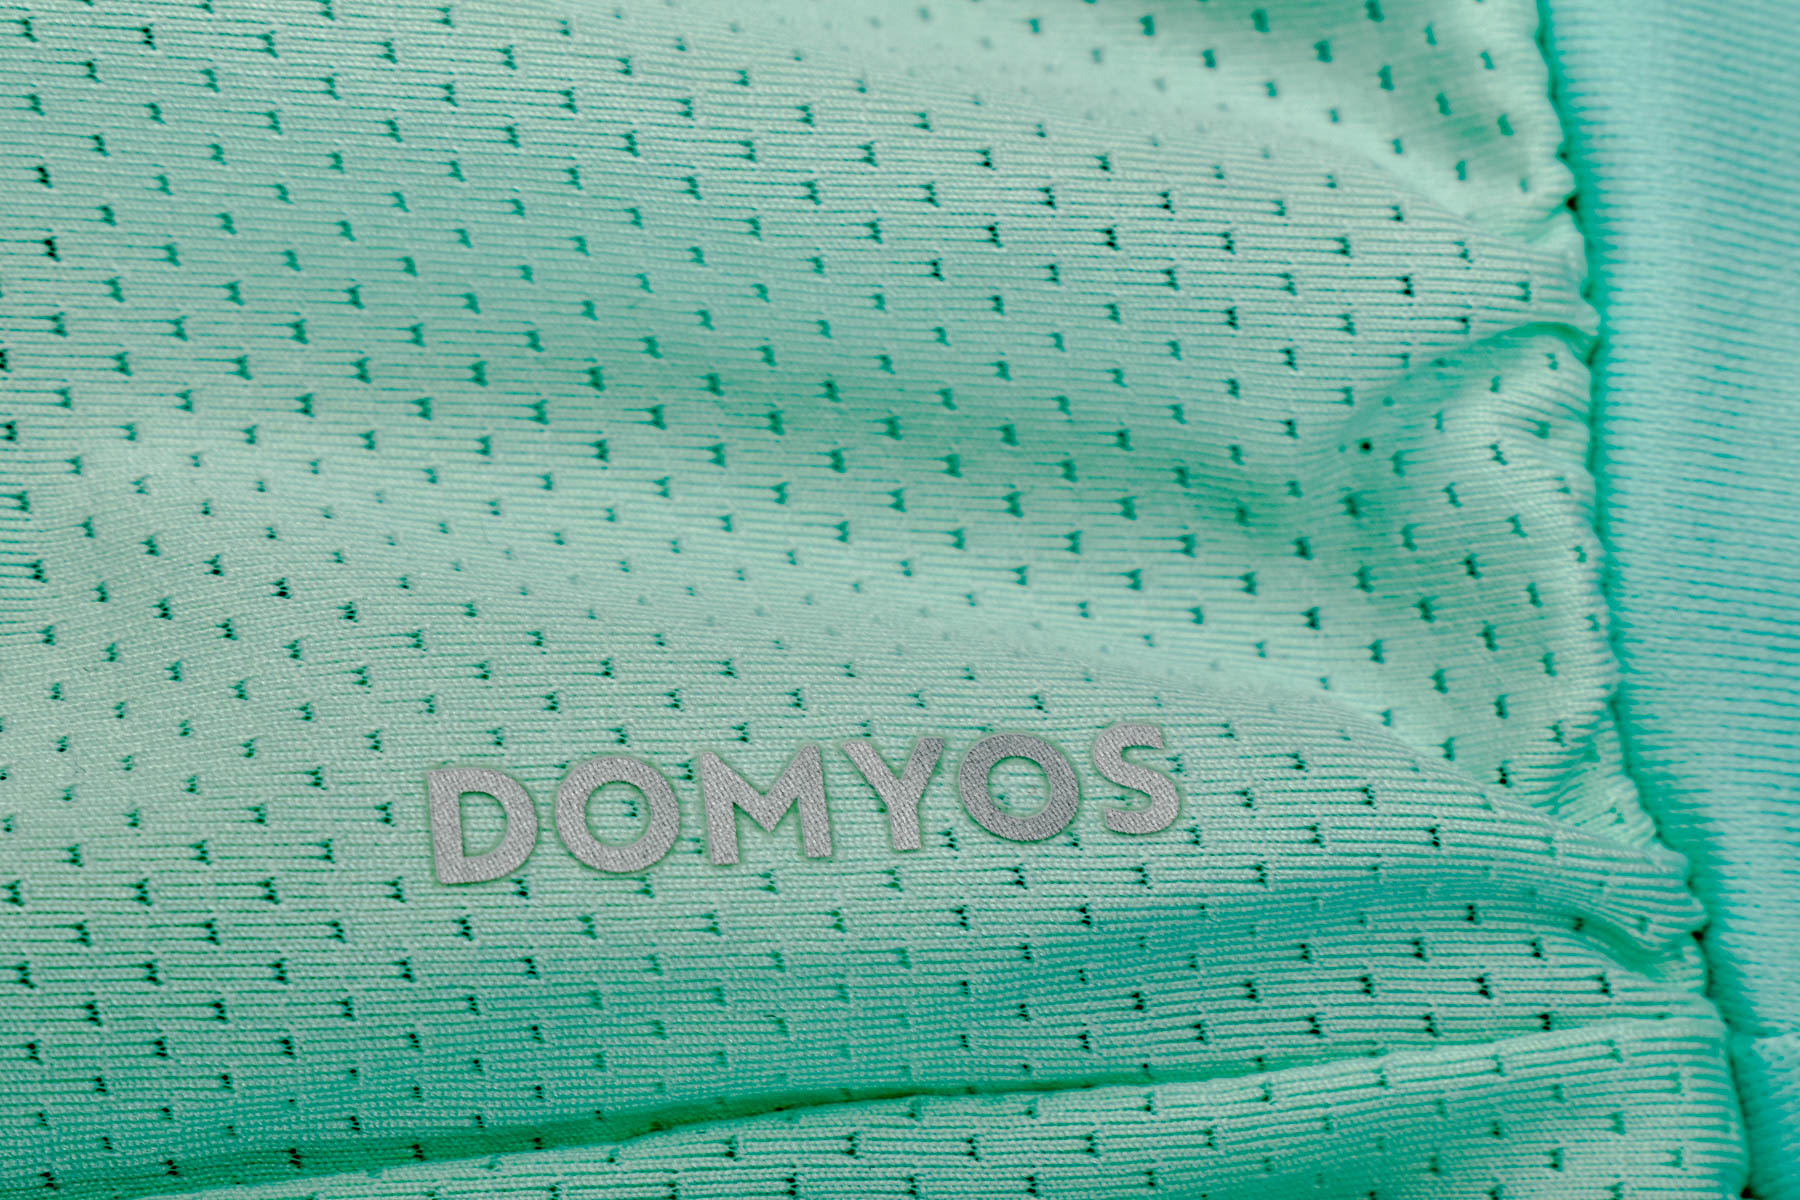 Women's shorts - Domyos - 2